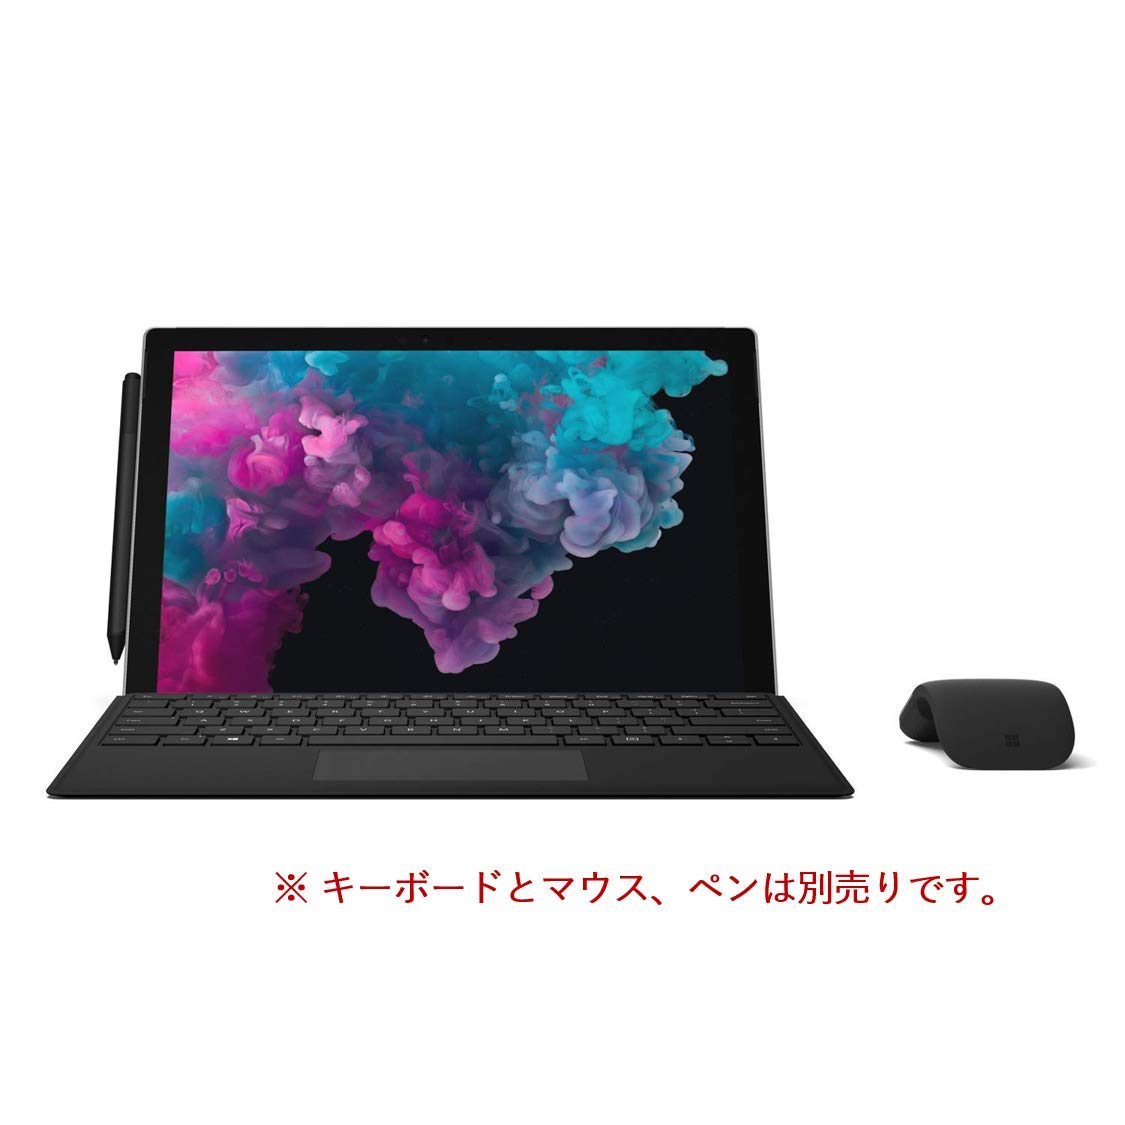 Microsoft Surface Pro 6 i5 8GB 256GB